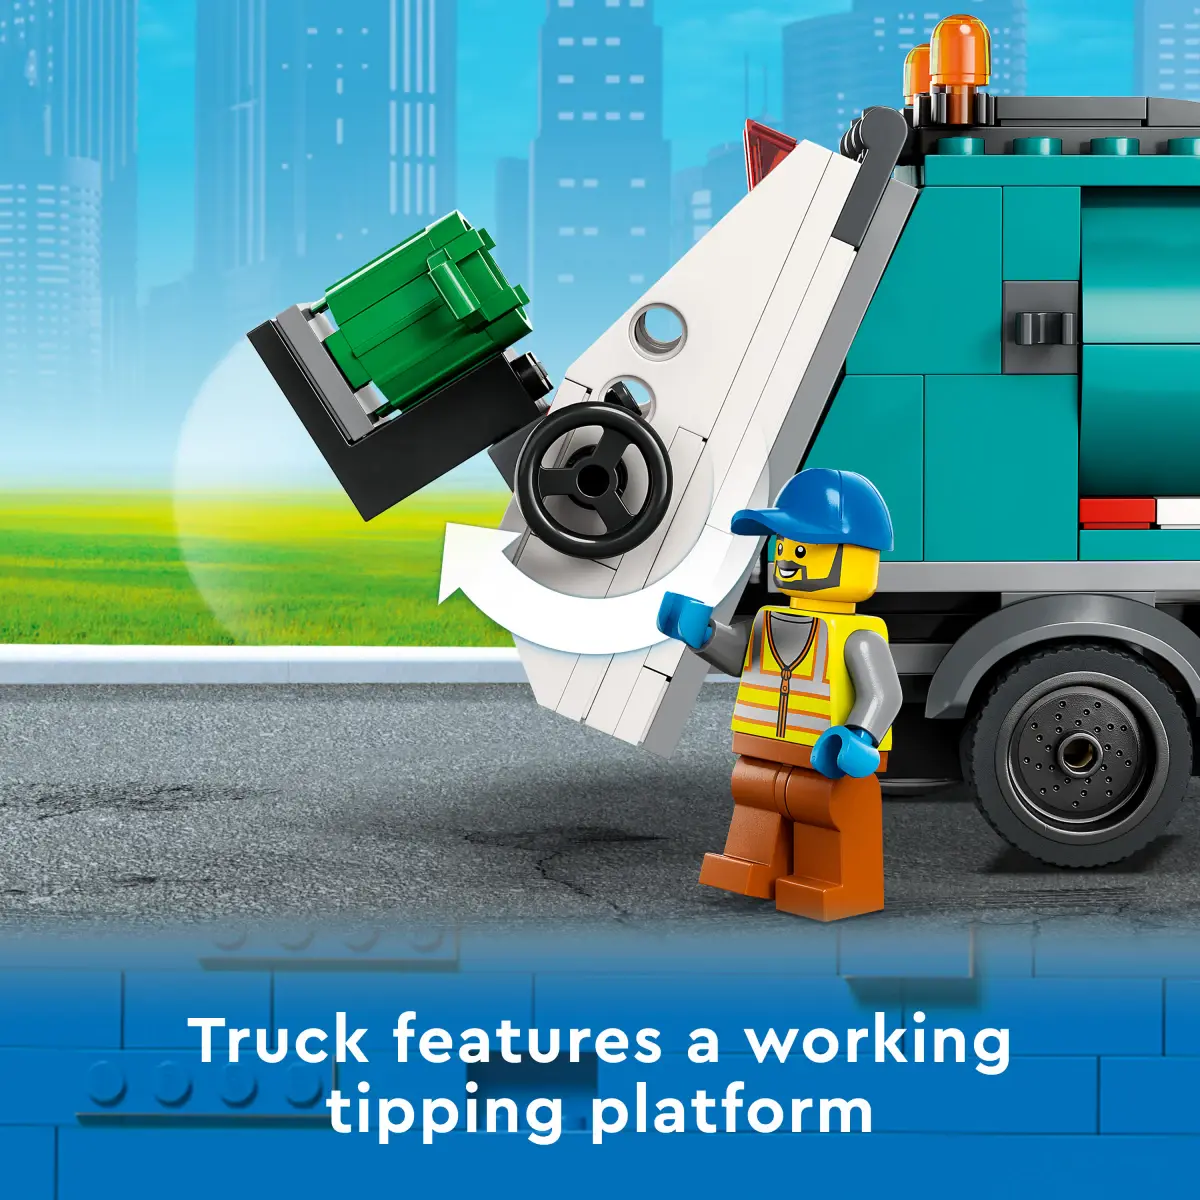 LEGO City Recycling Truck Building Toy Set, 261 Pieces, Multicolour, 5Y+